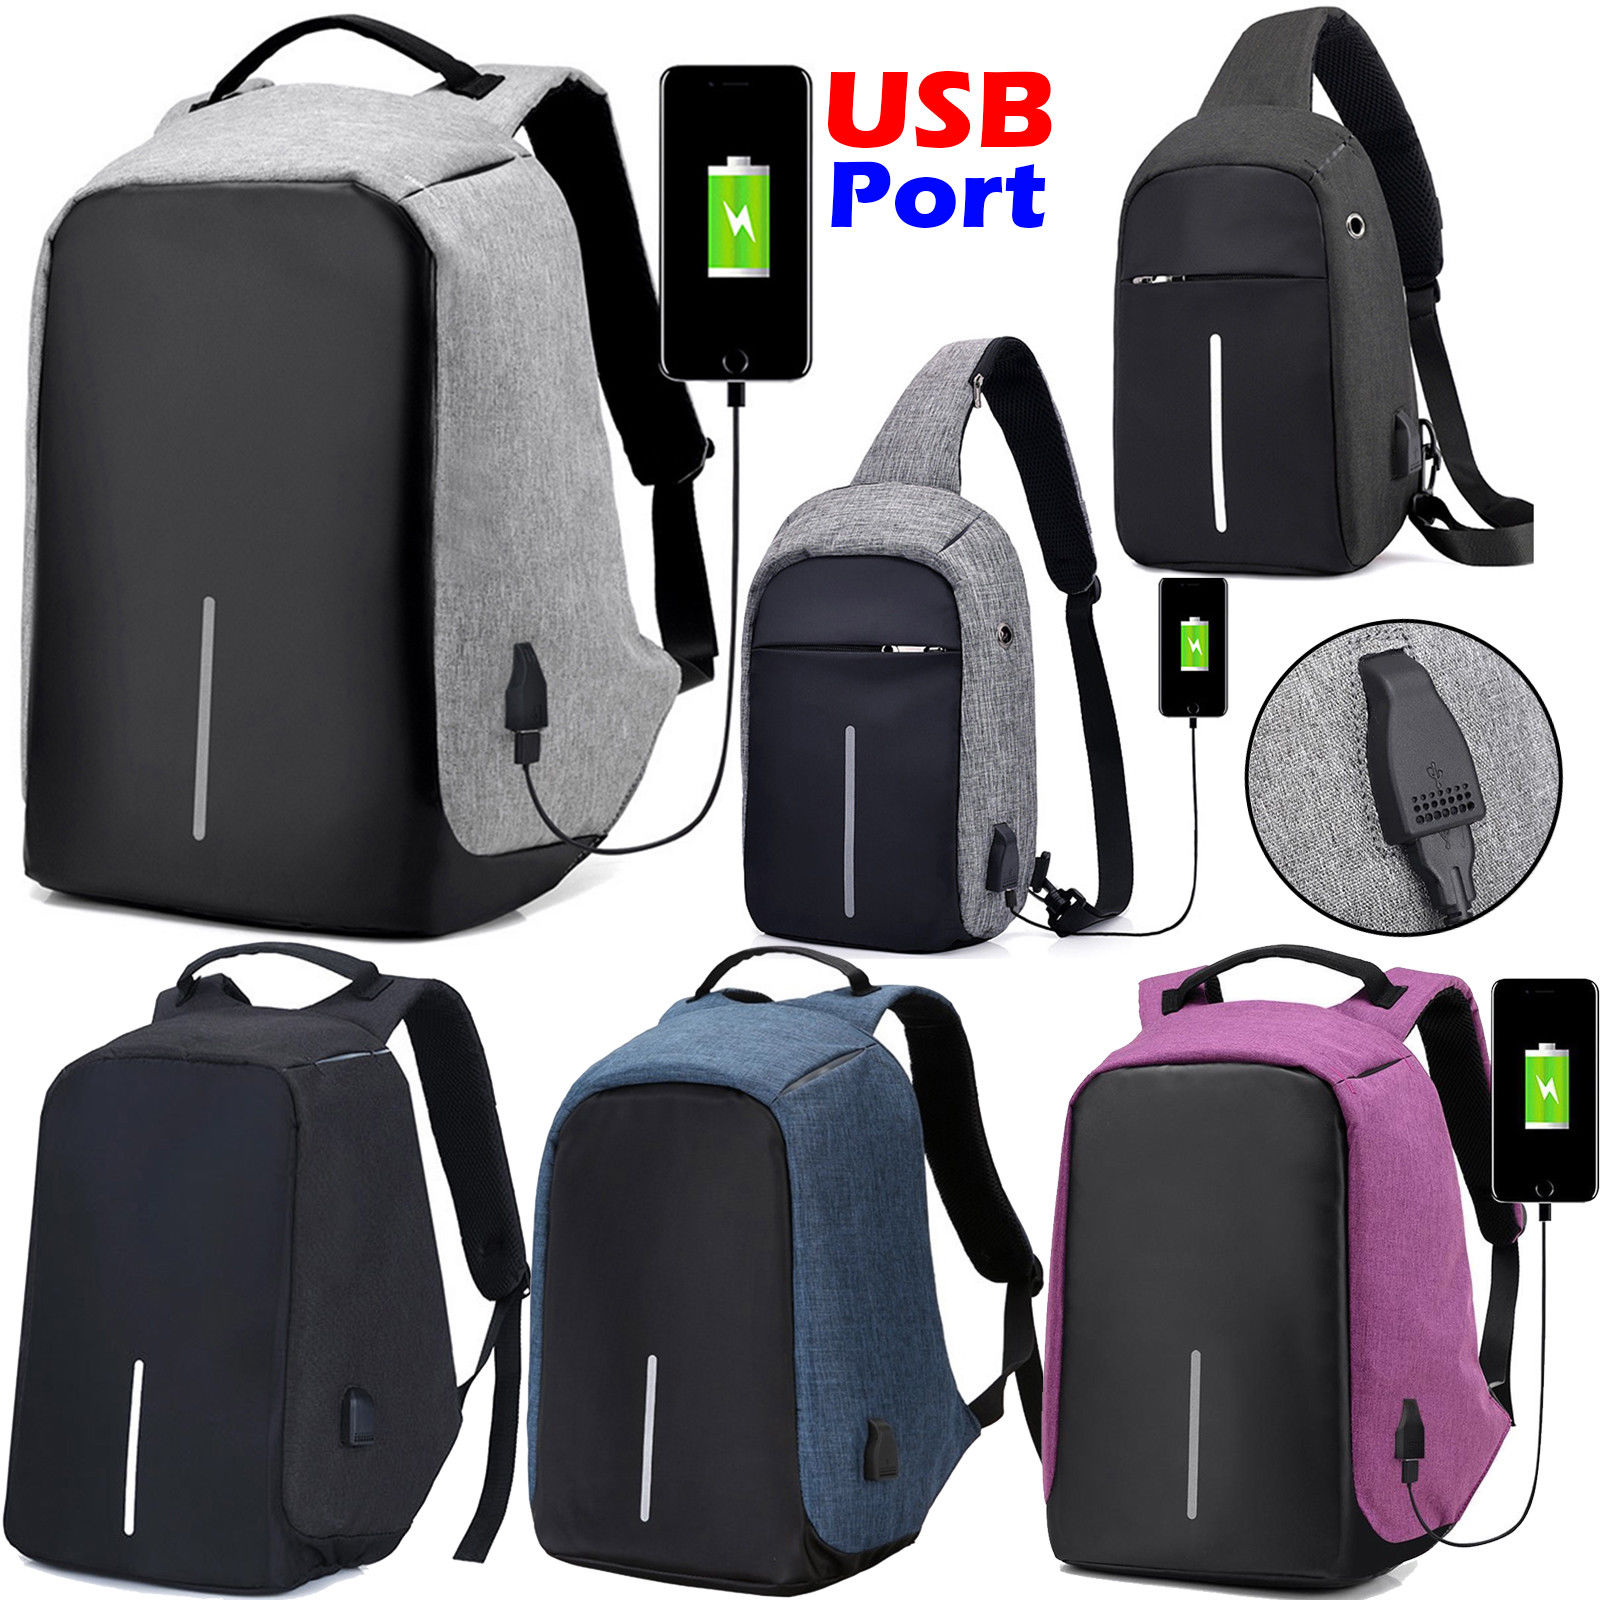 Studify - כל מה שסטודנט צריך תיקים Anti-Theft Laptop Backpack School Travel Business Sling Shoulder Bag w/ USB Port